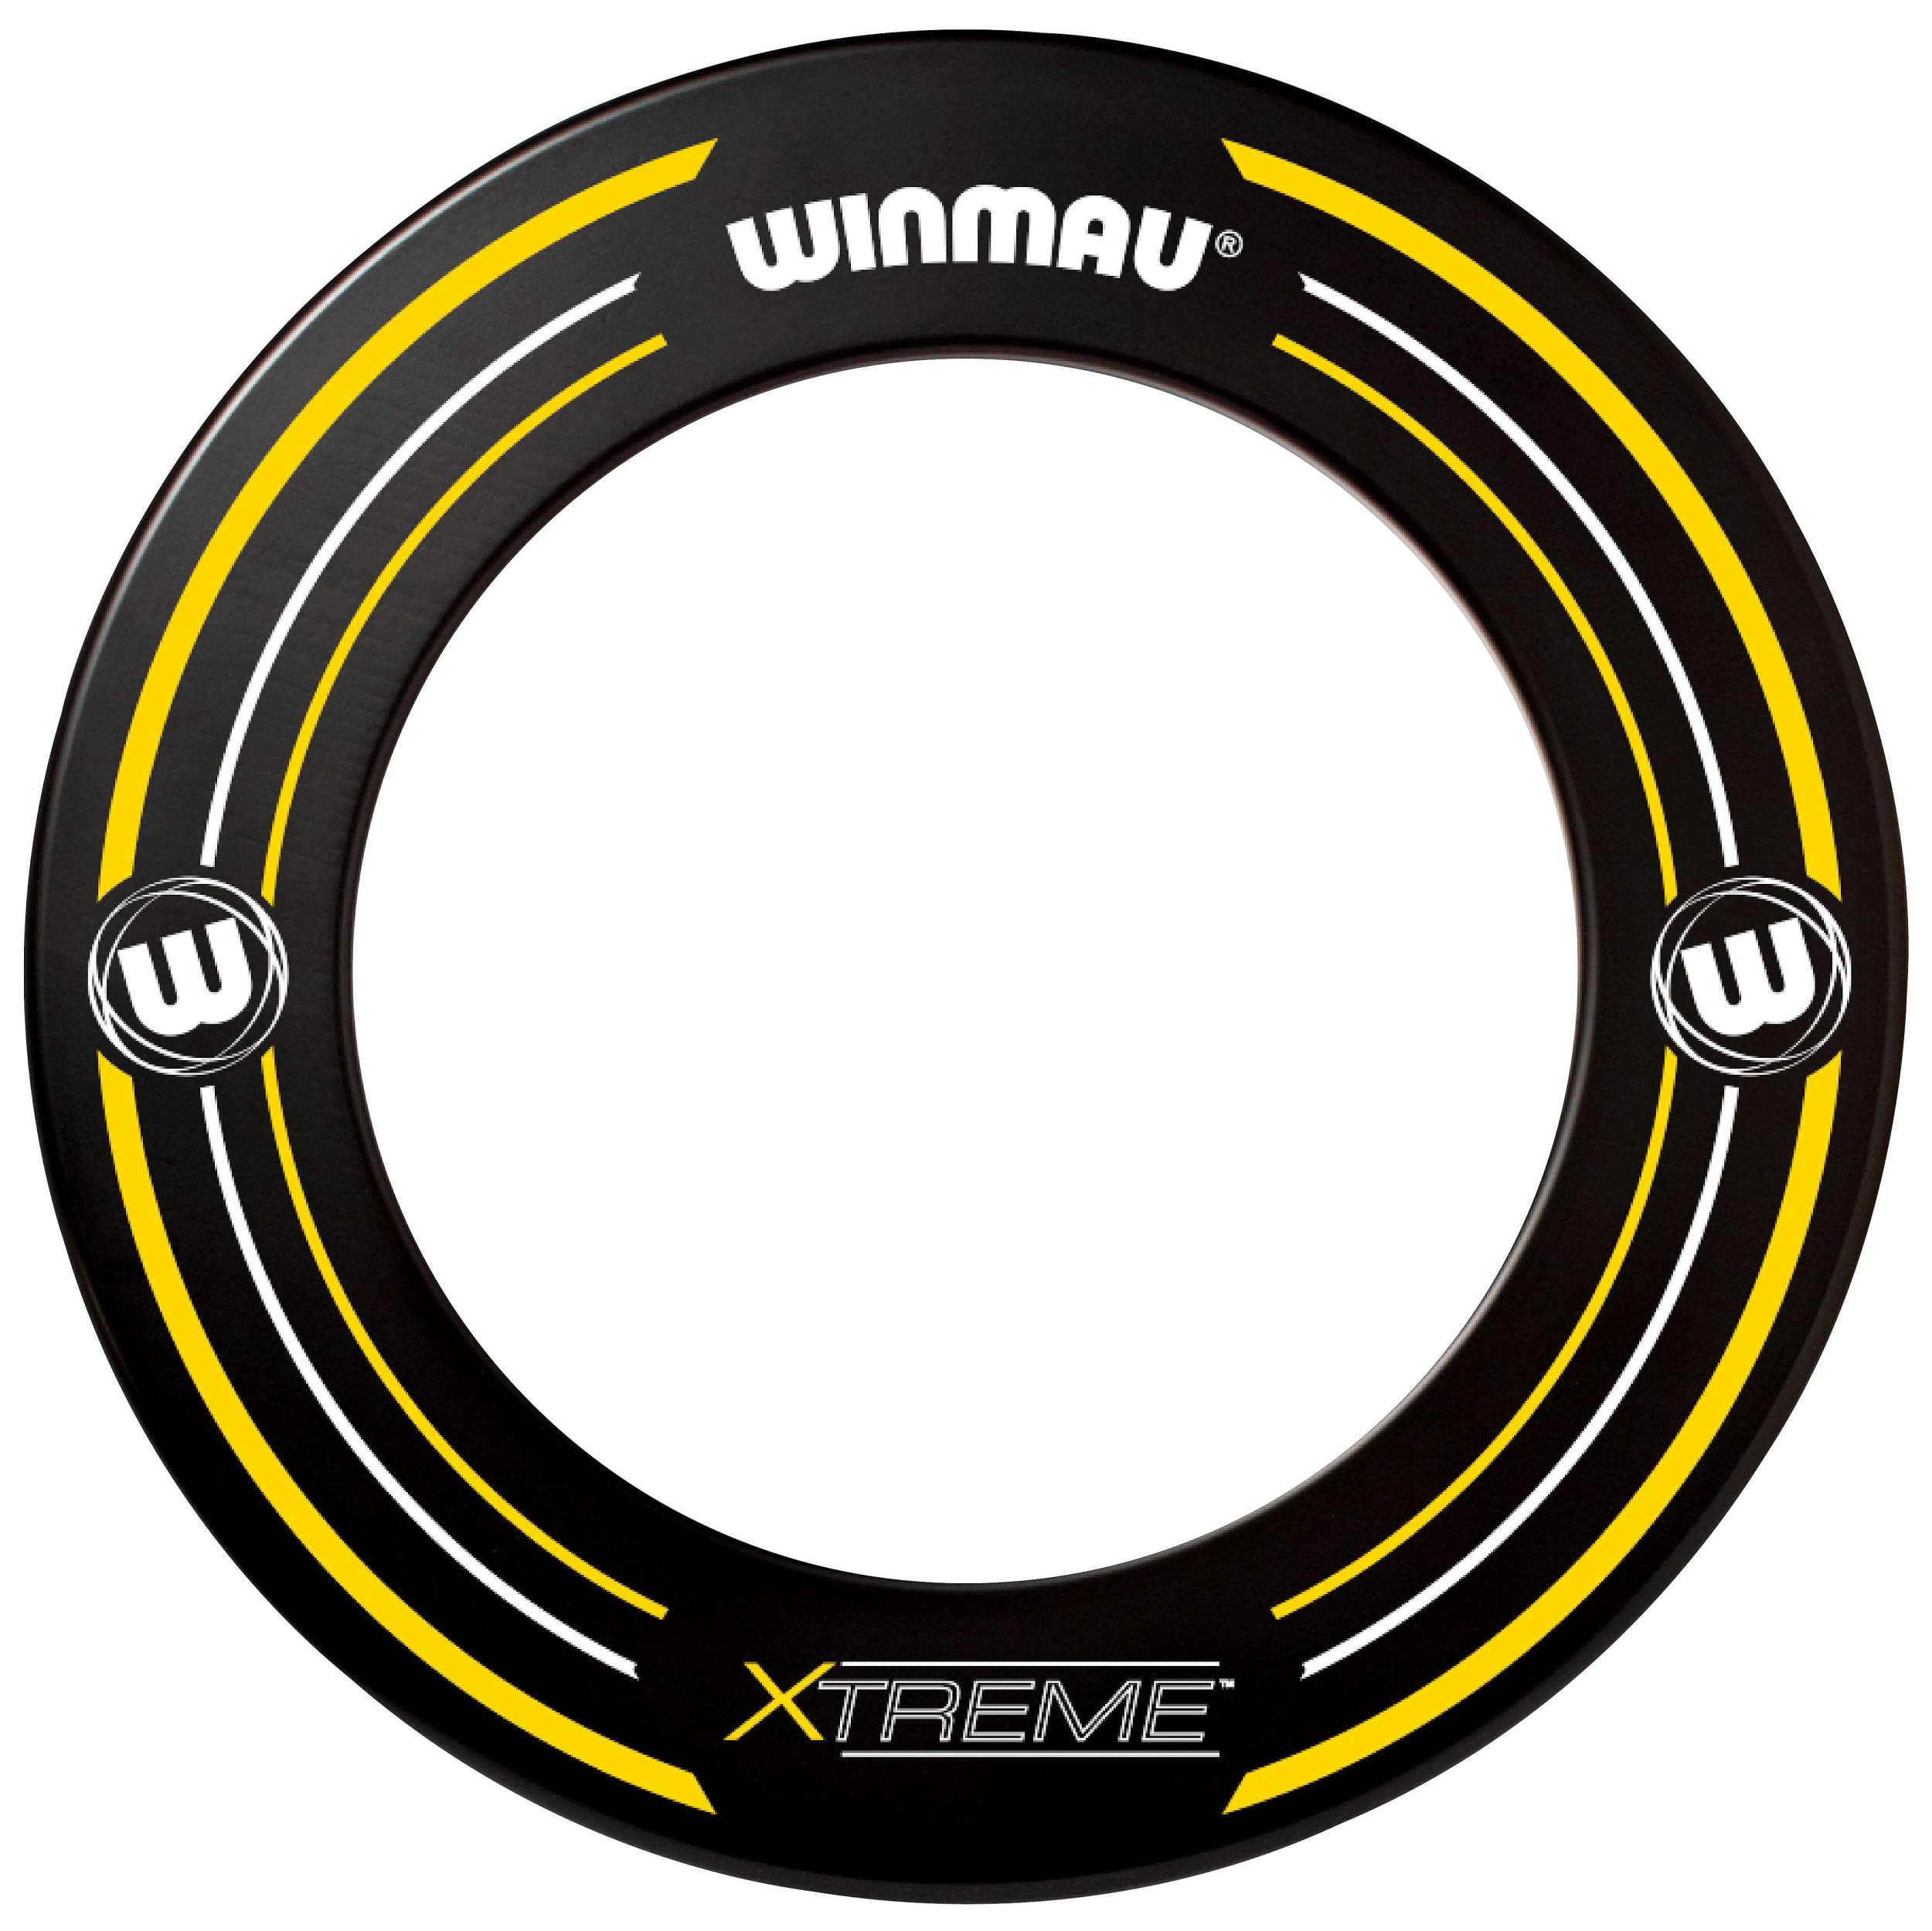 Winmau - Xtreme 2 Surround